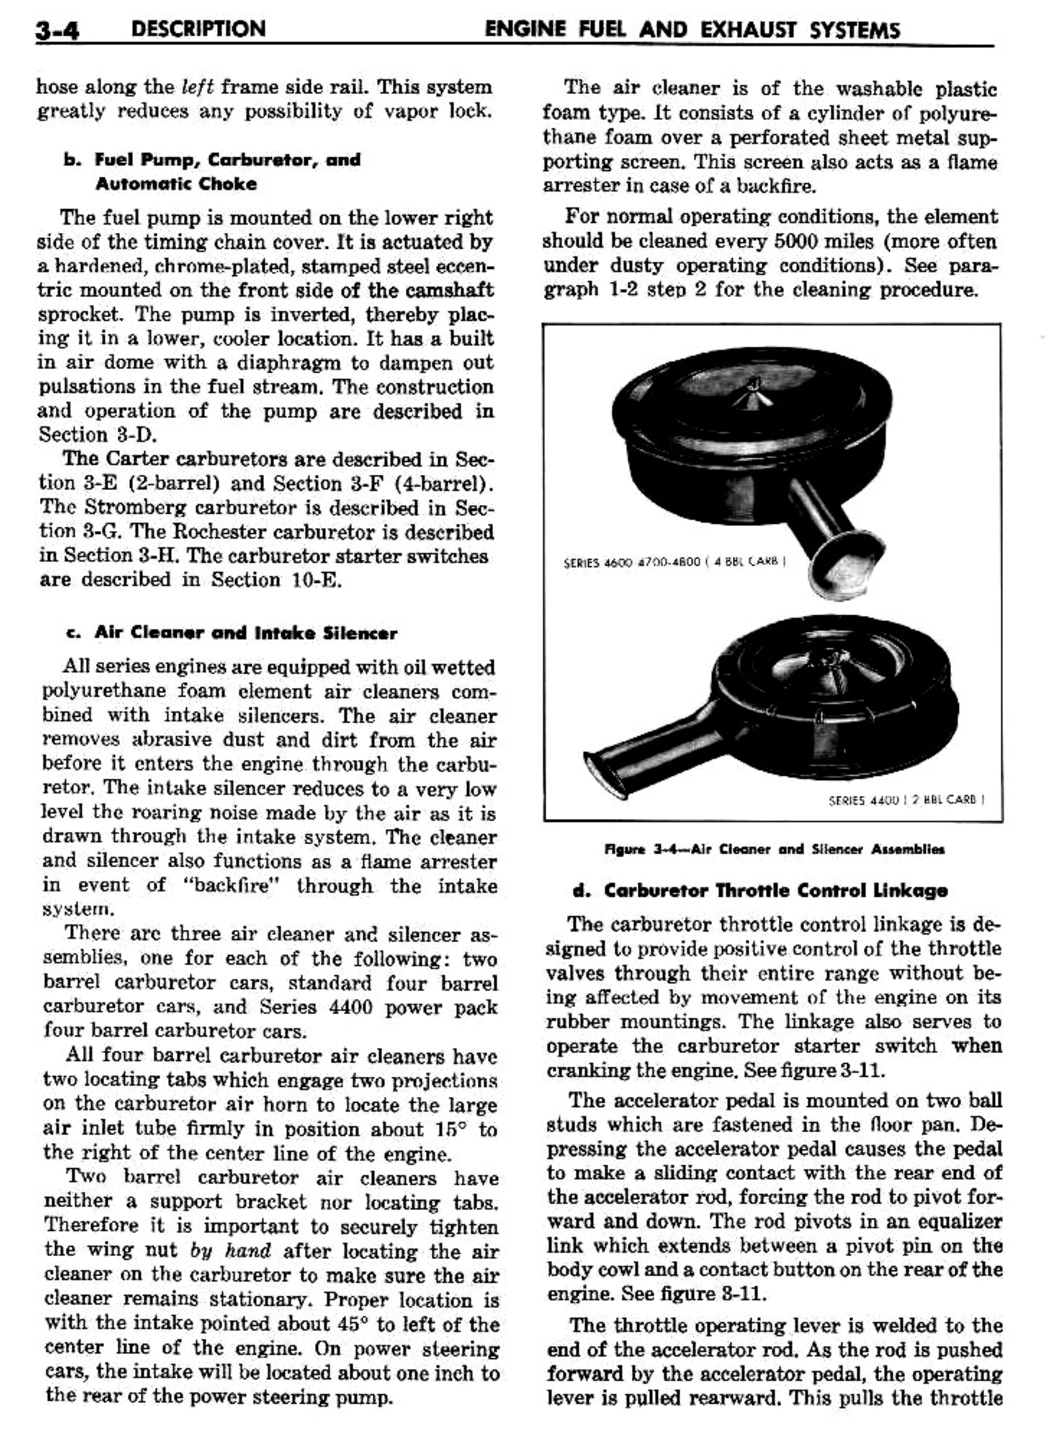 n_04 1960 Buick Shop Manual - Engine Fuel & Exhaust-004-004.jpg